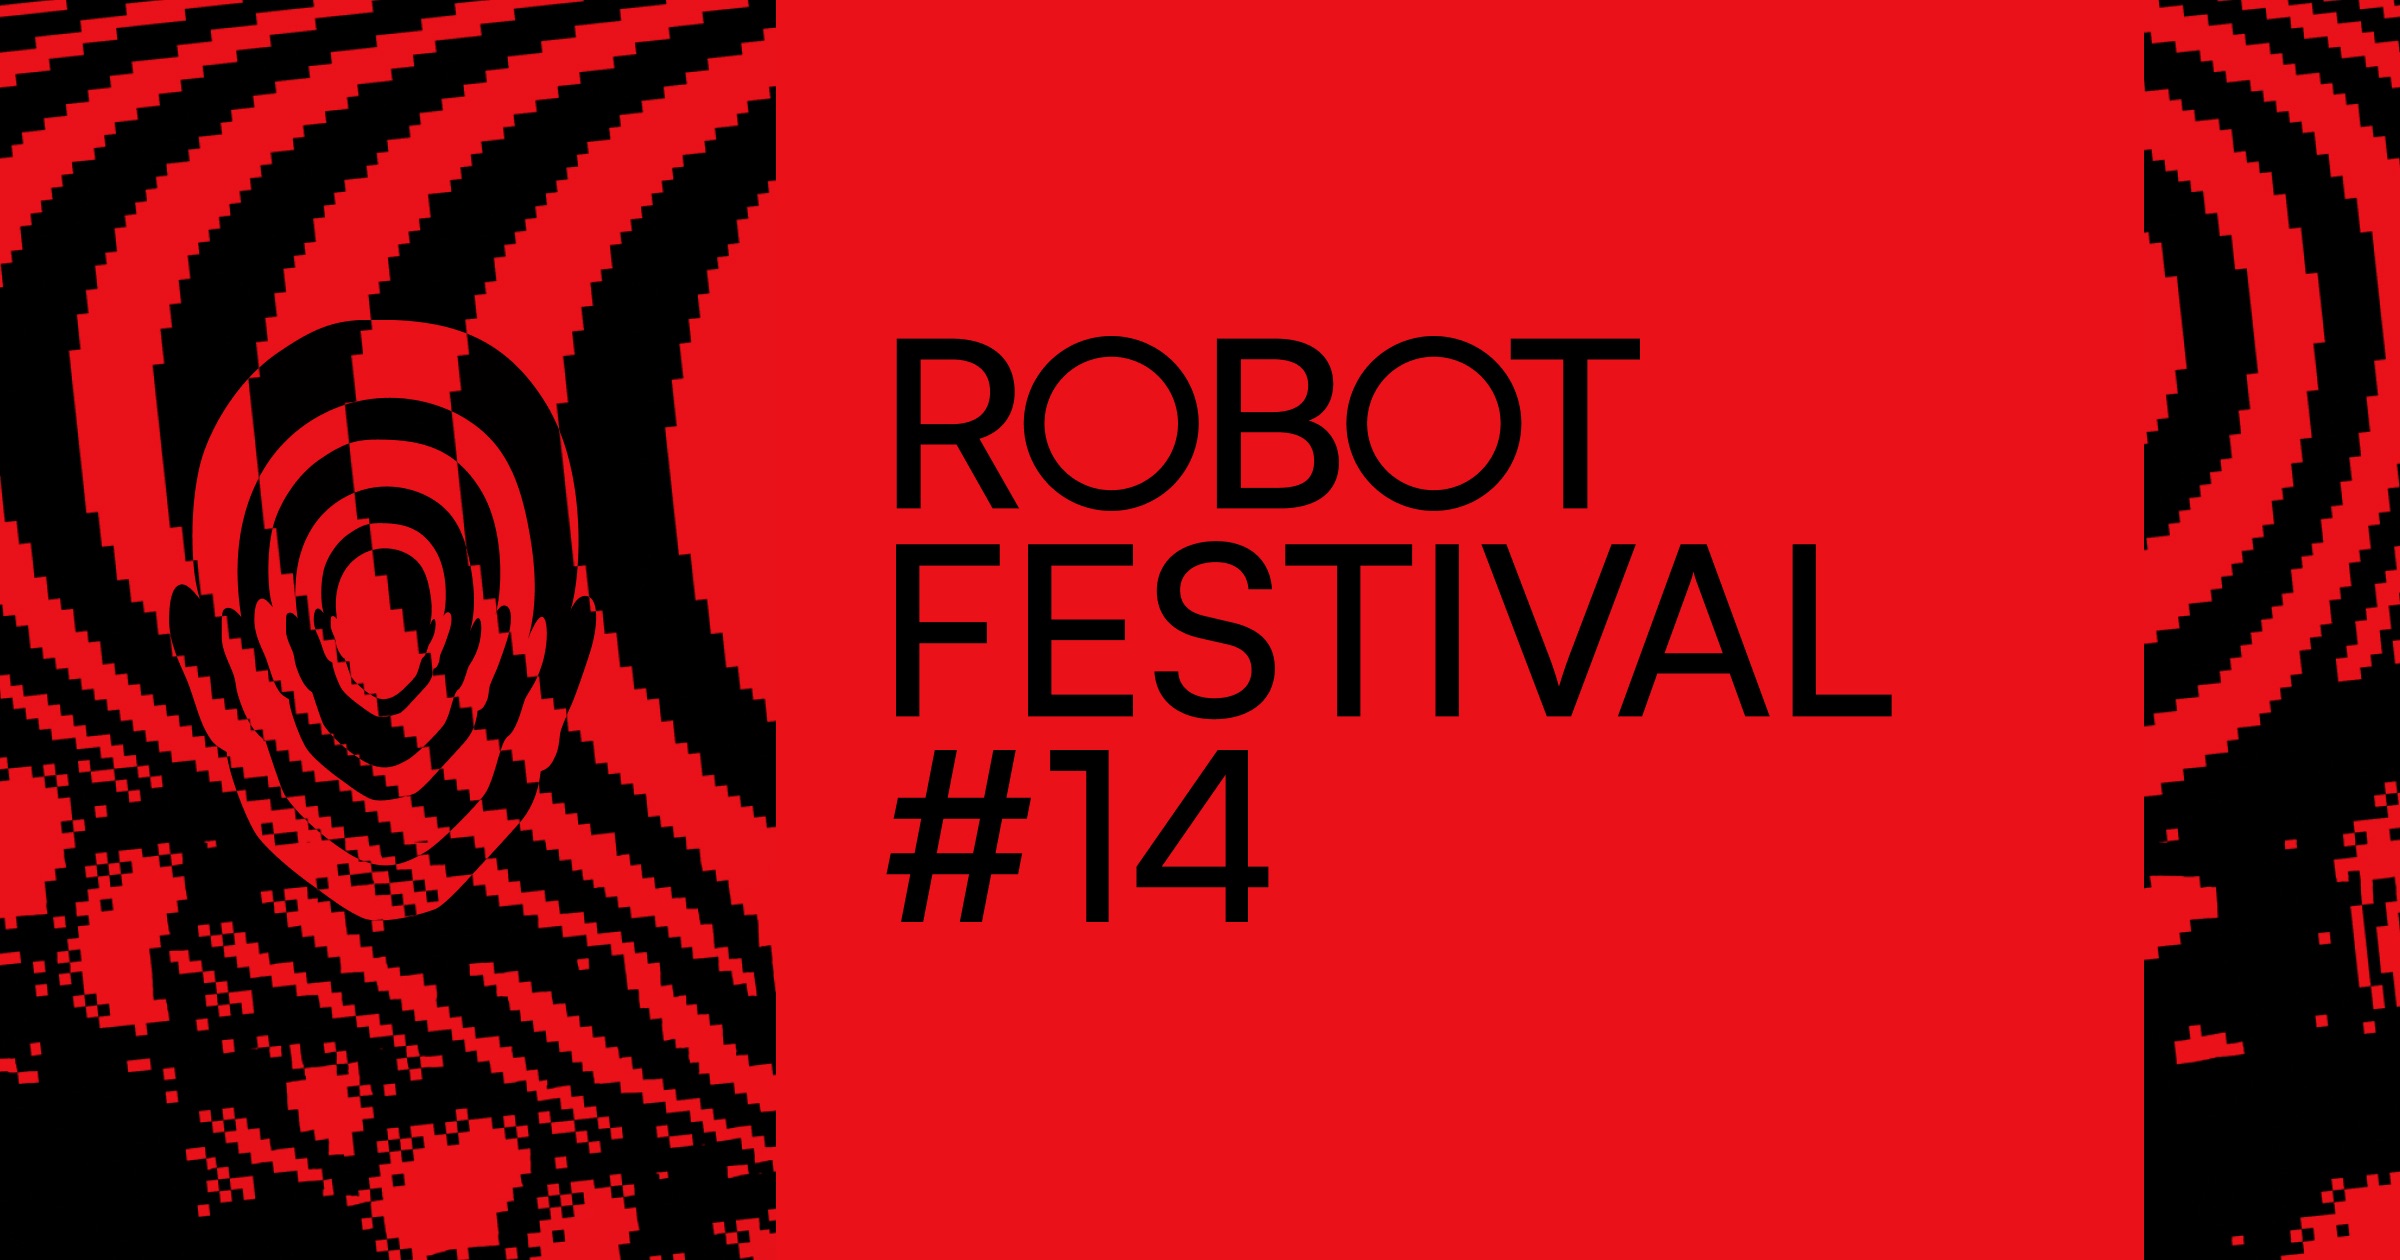 (c) Robotfestival.it